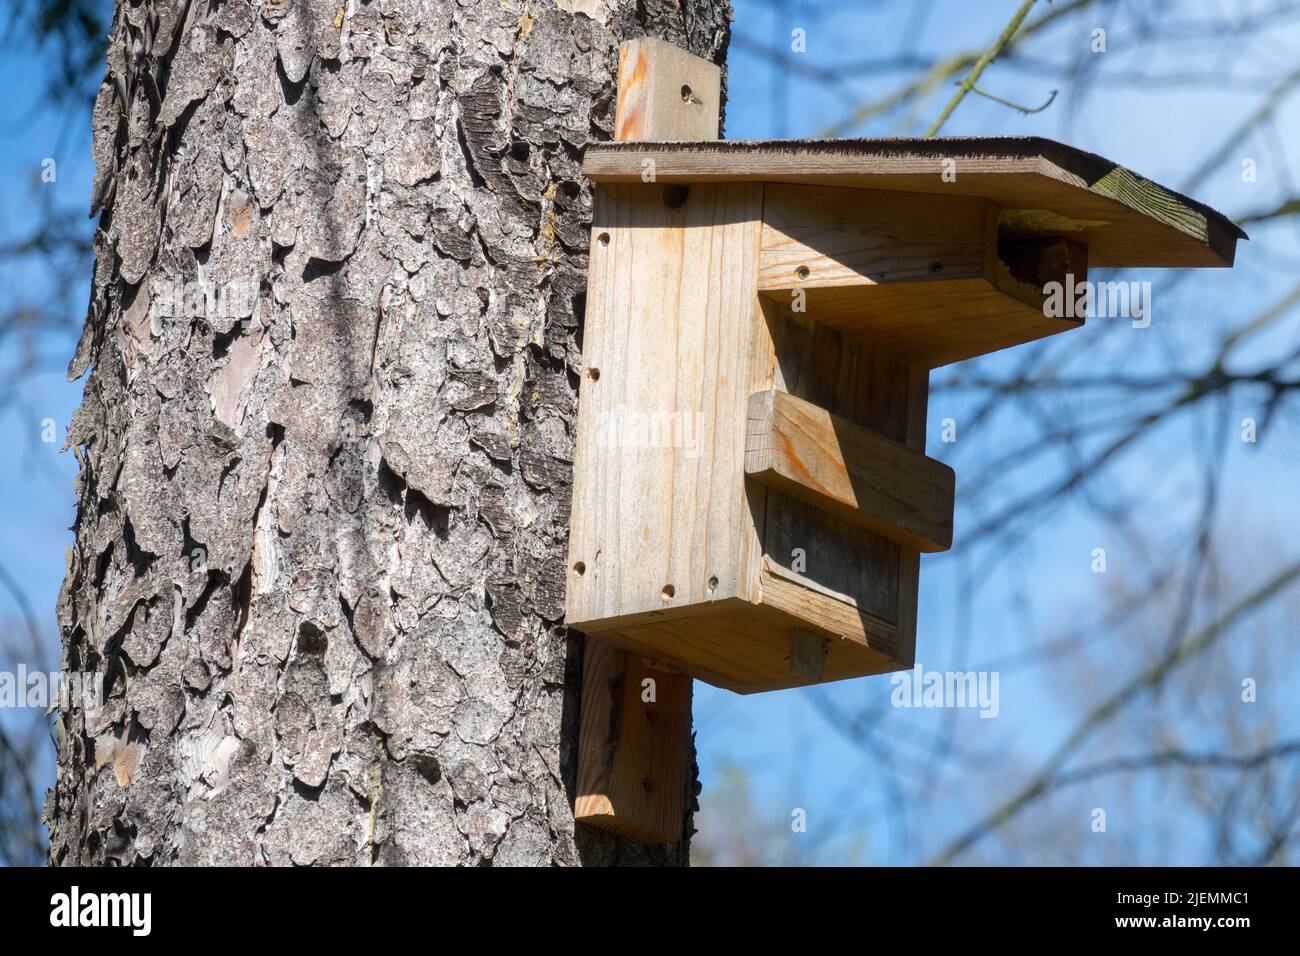 Wooden birdhouse, Hanging on Tree Trunk, Birdhouse in Garden Stock Photo